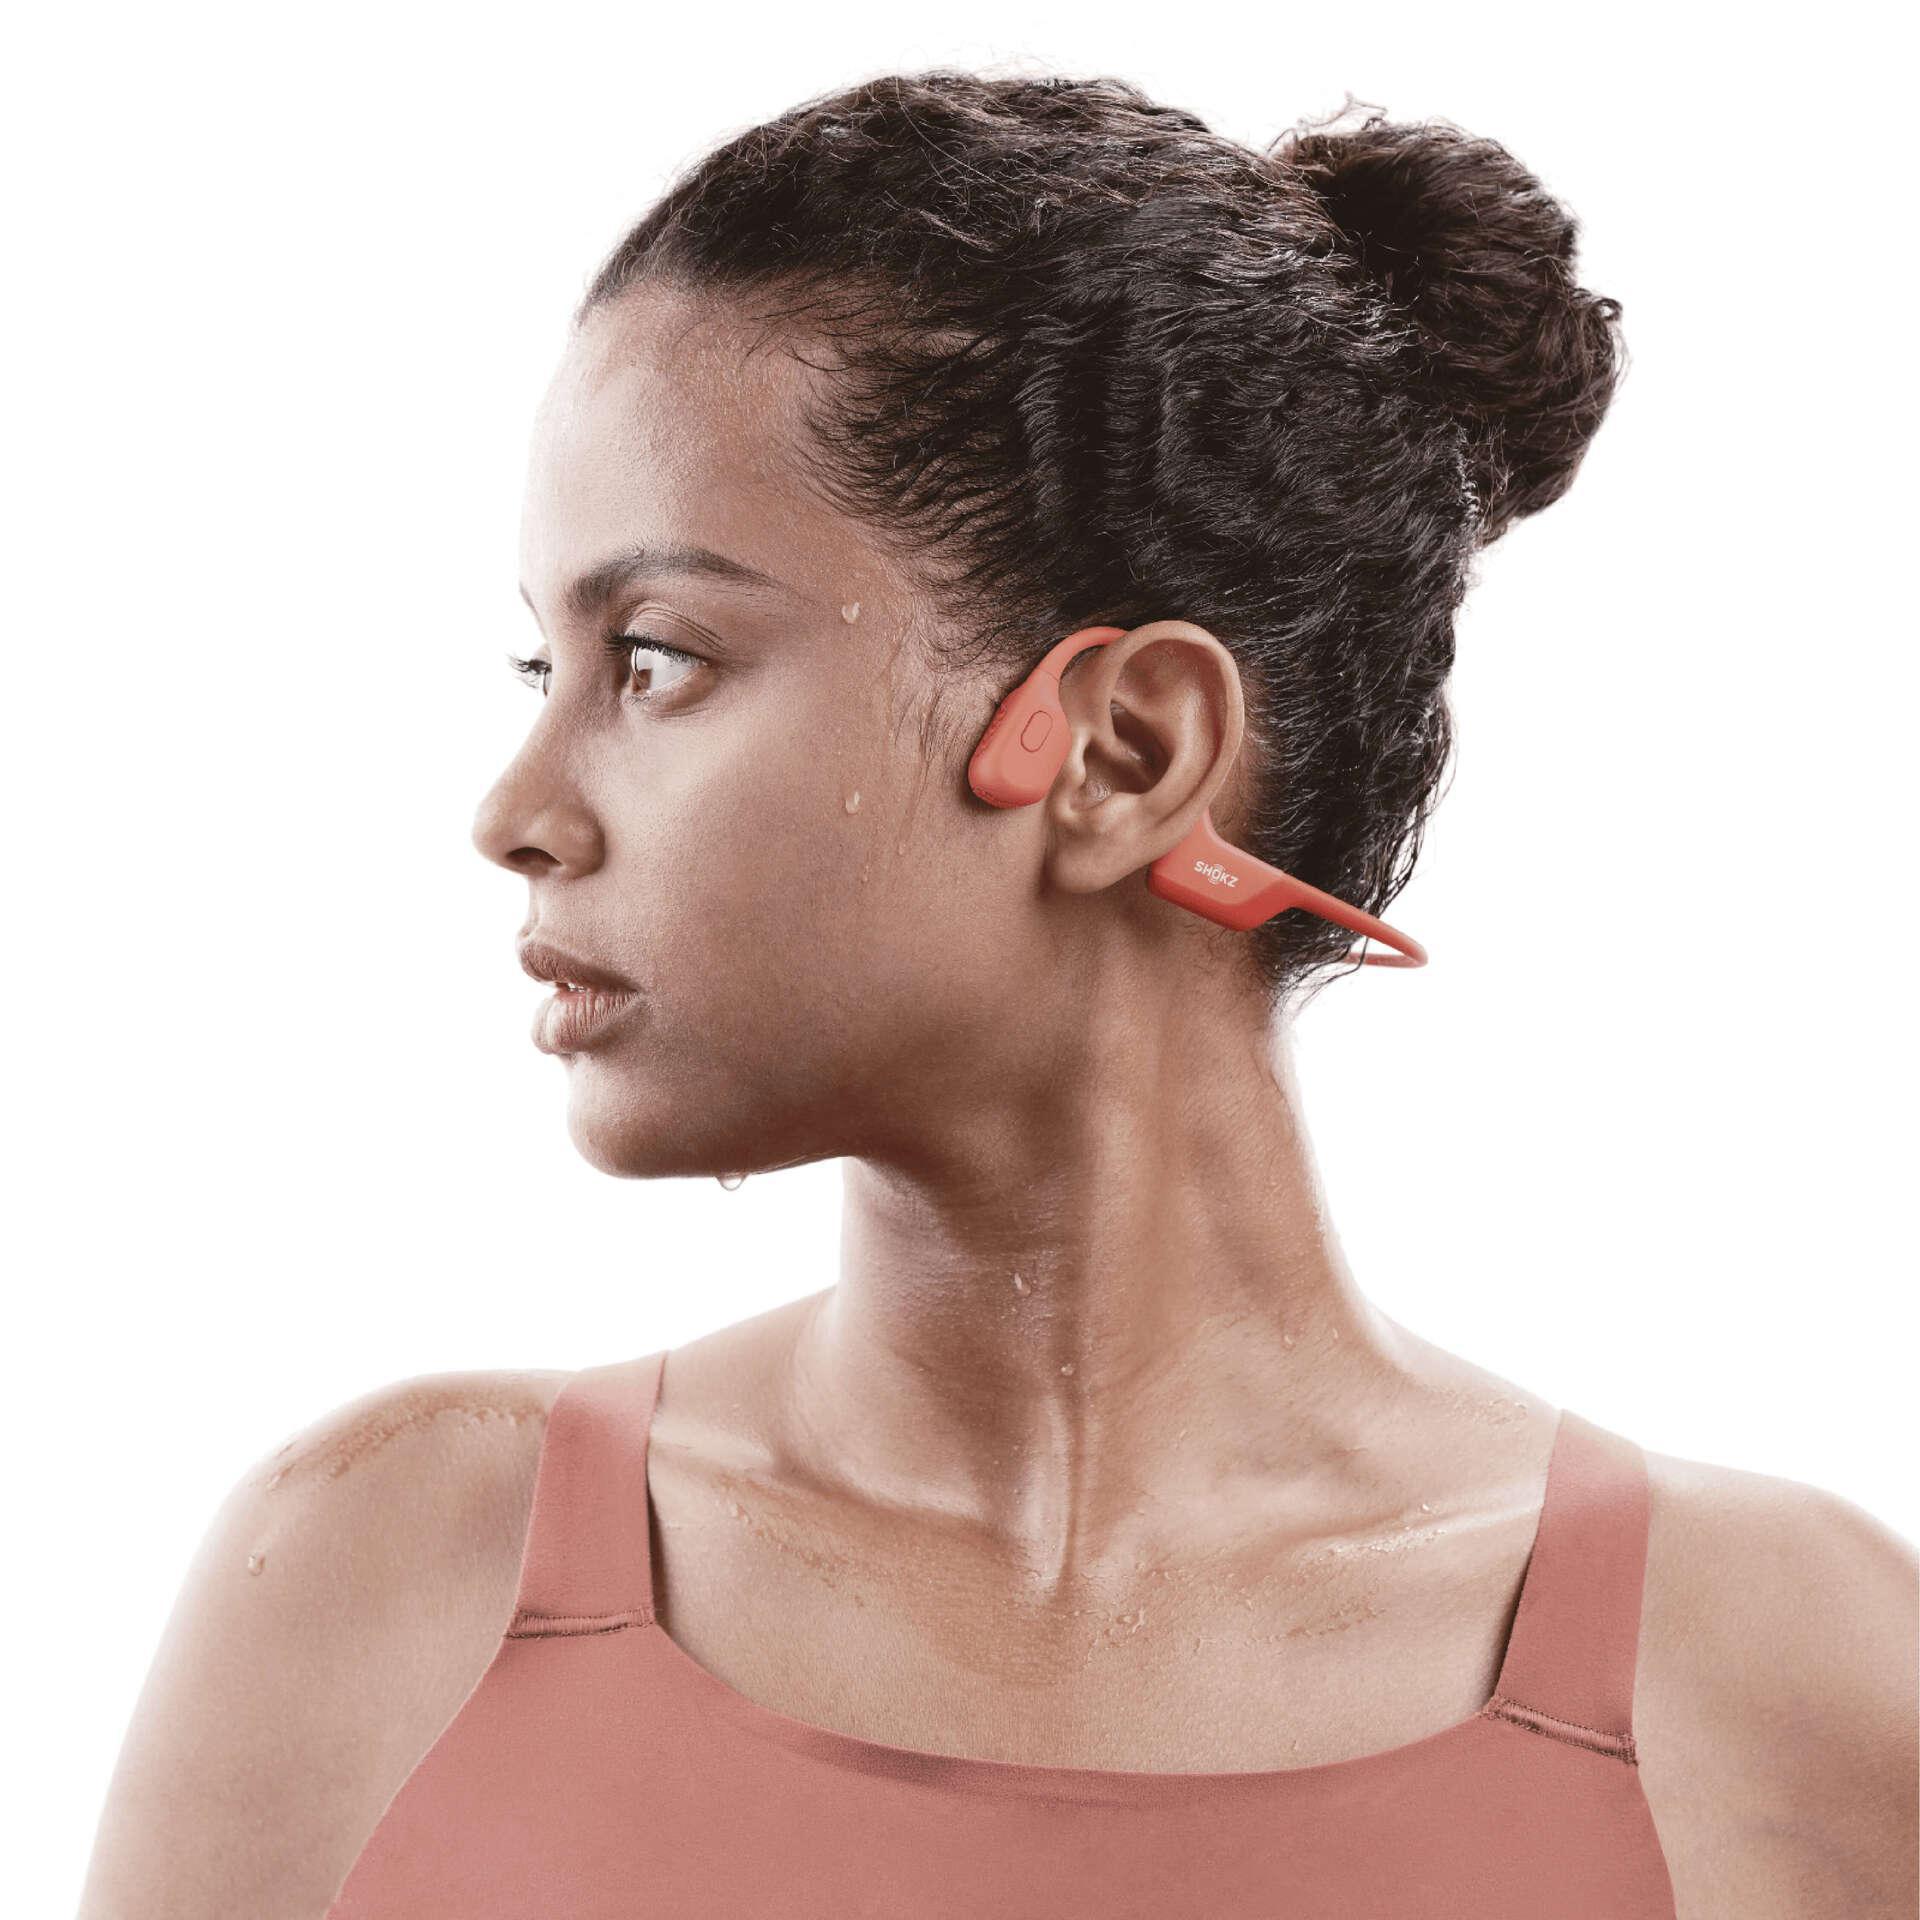 SHOKZ OpenRun Open-ear Pro, Pink Bluetooth Kopfhörer